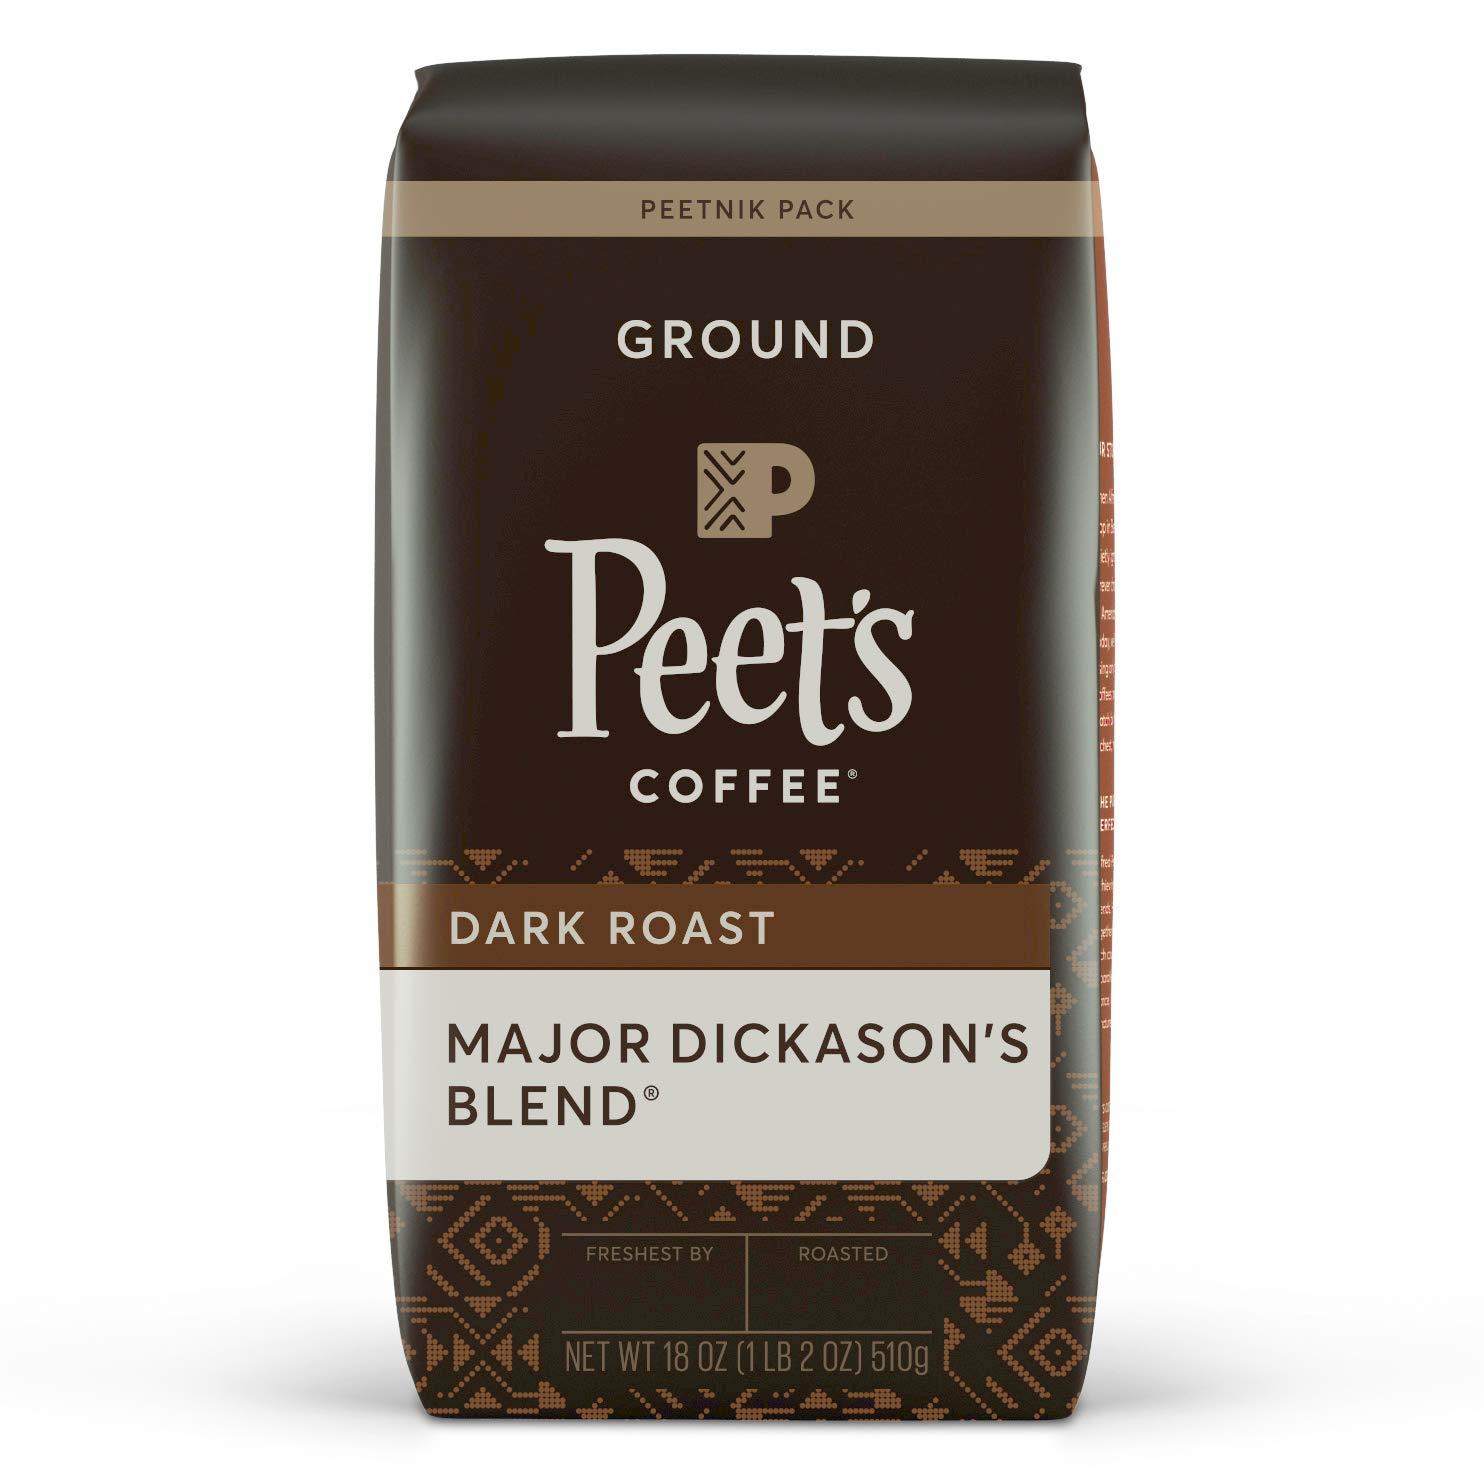 Peets Coffee Dark Roast Ground Coffee for $7.13 Shipped